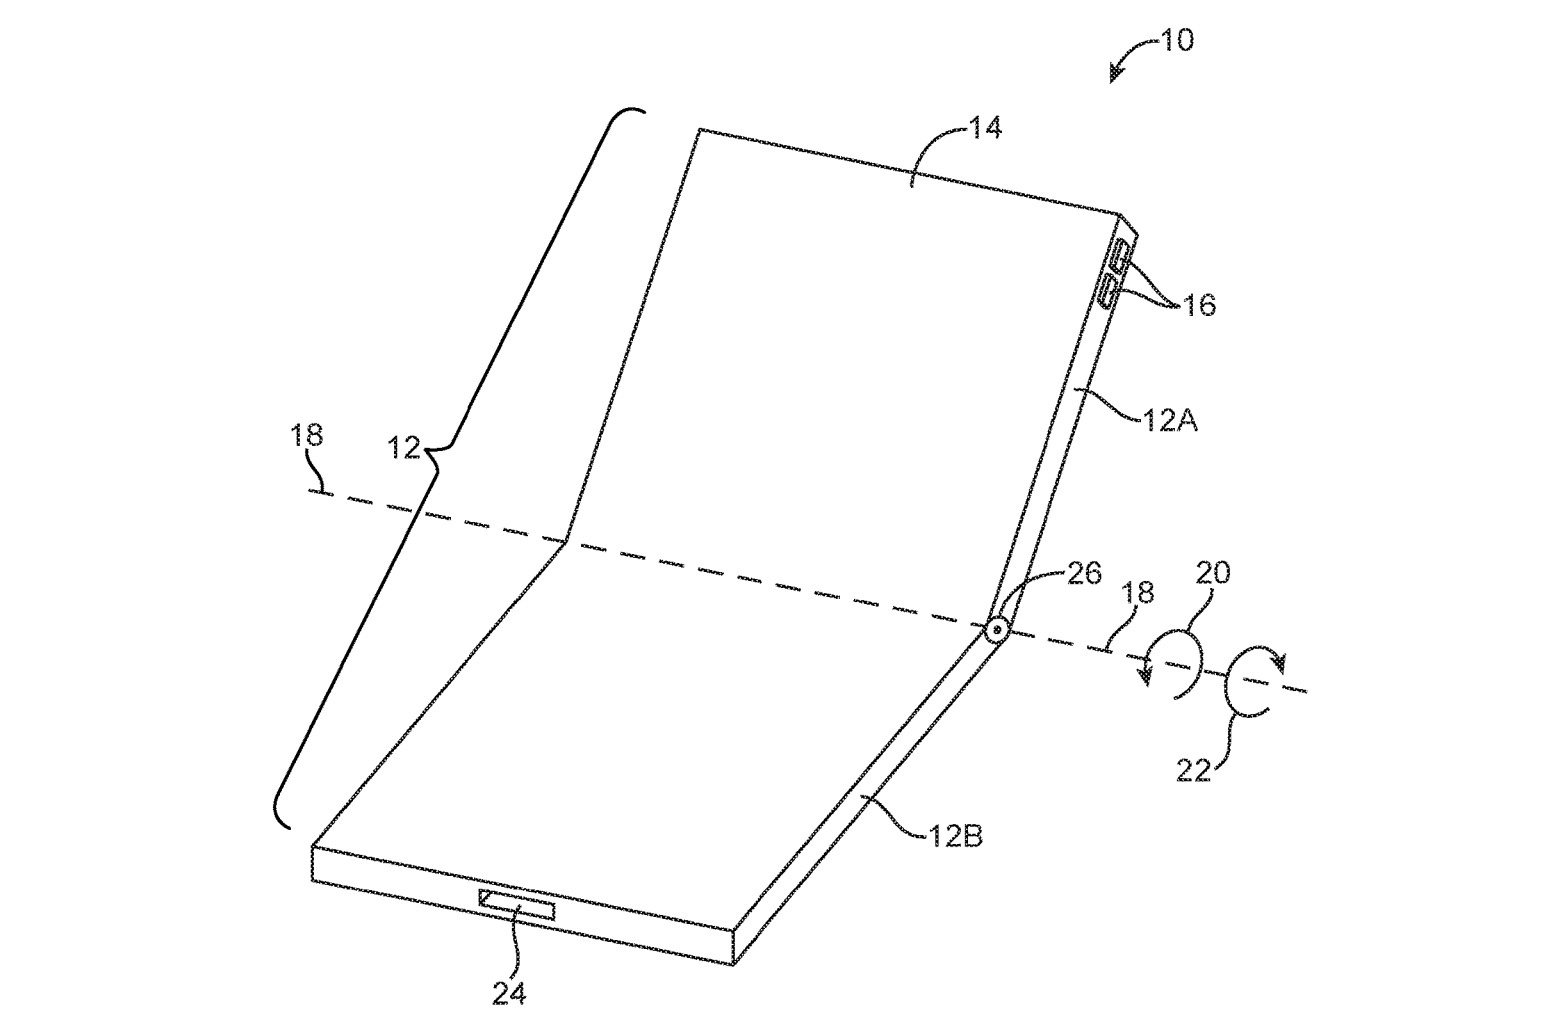 nouveau brevet accorde apple donne apercu iphone pliable